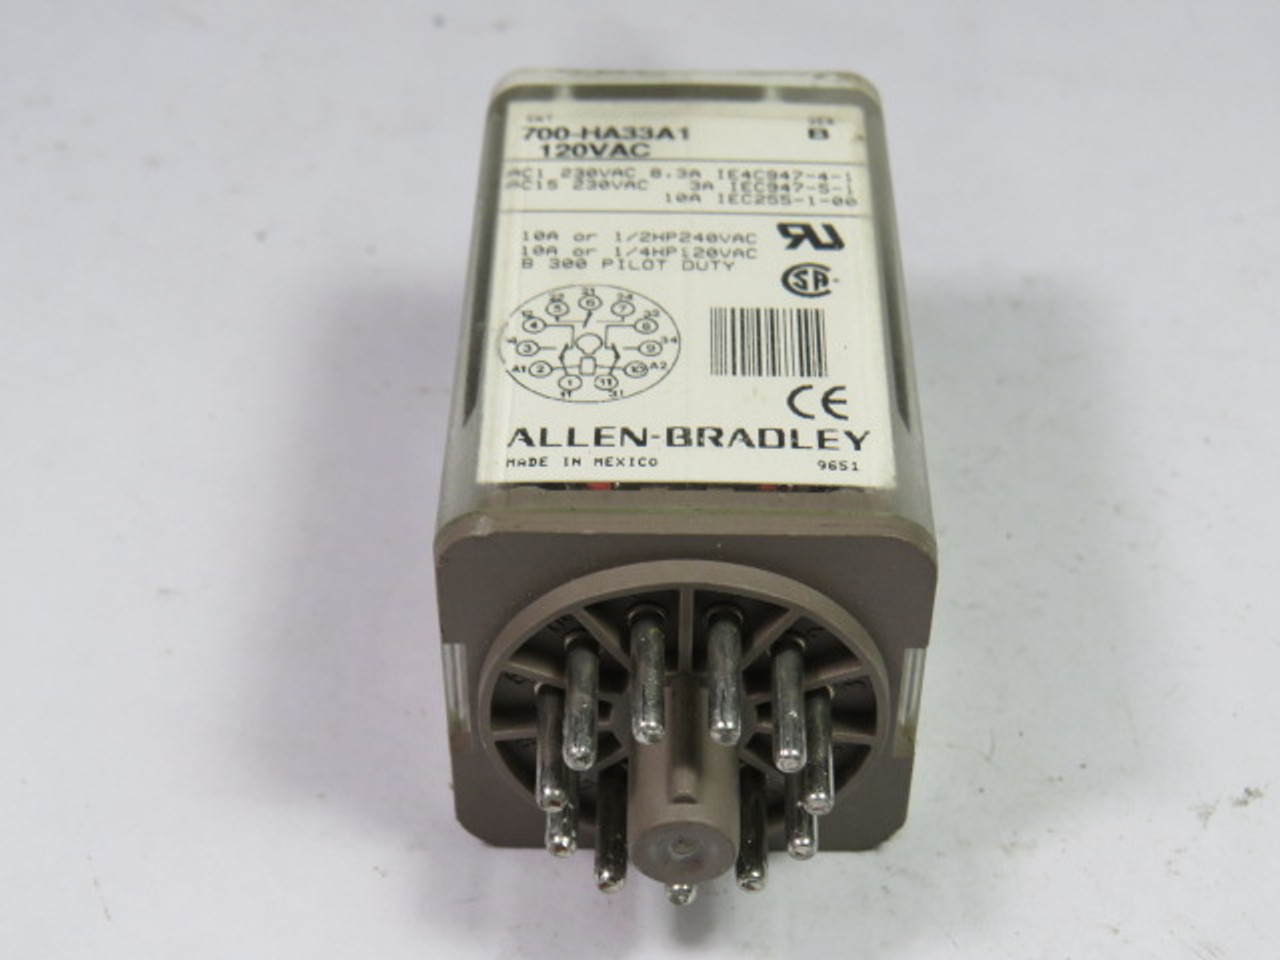 Allen-Bradley 700-HA33A1 Tube Base Relay 120VAC Series B USED